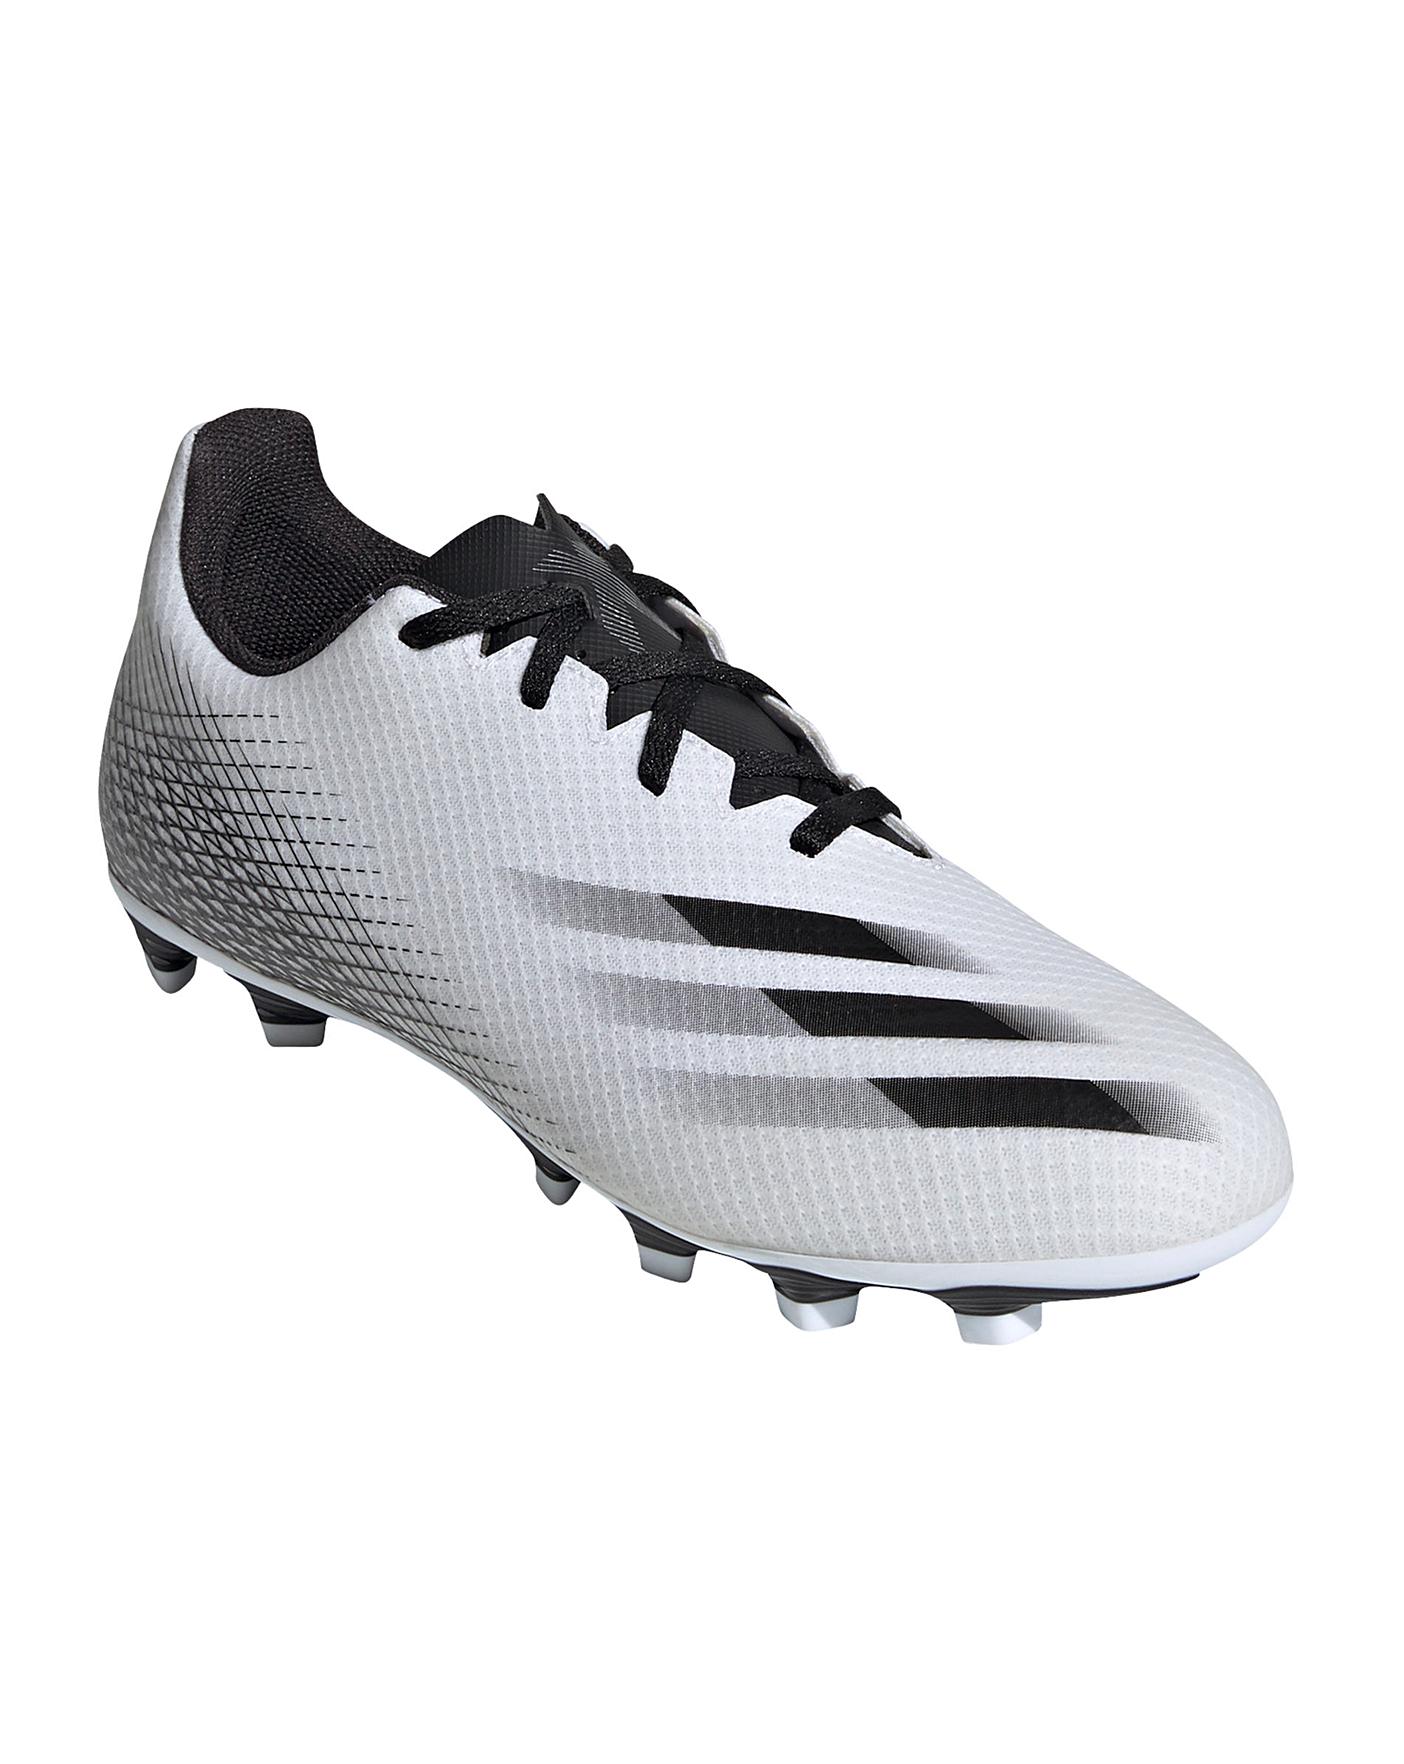 adidas ghost football boots